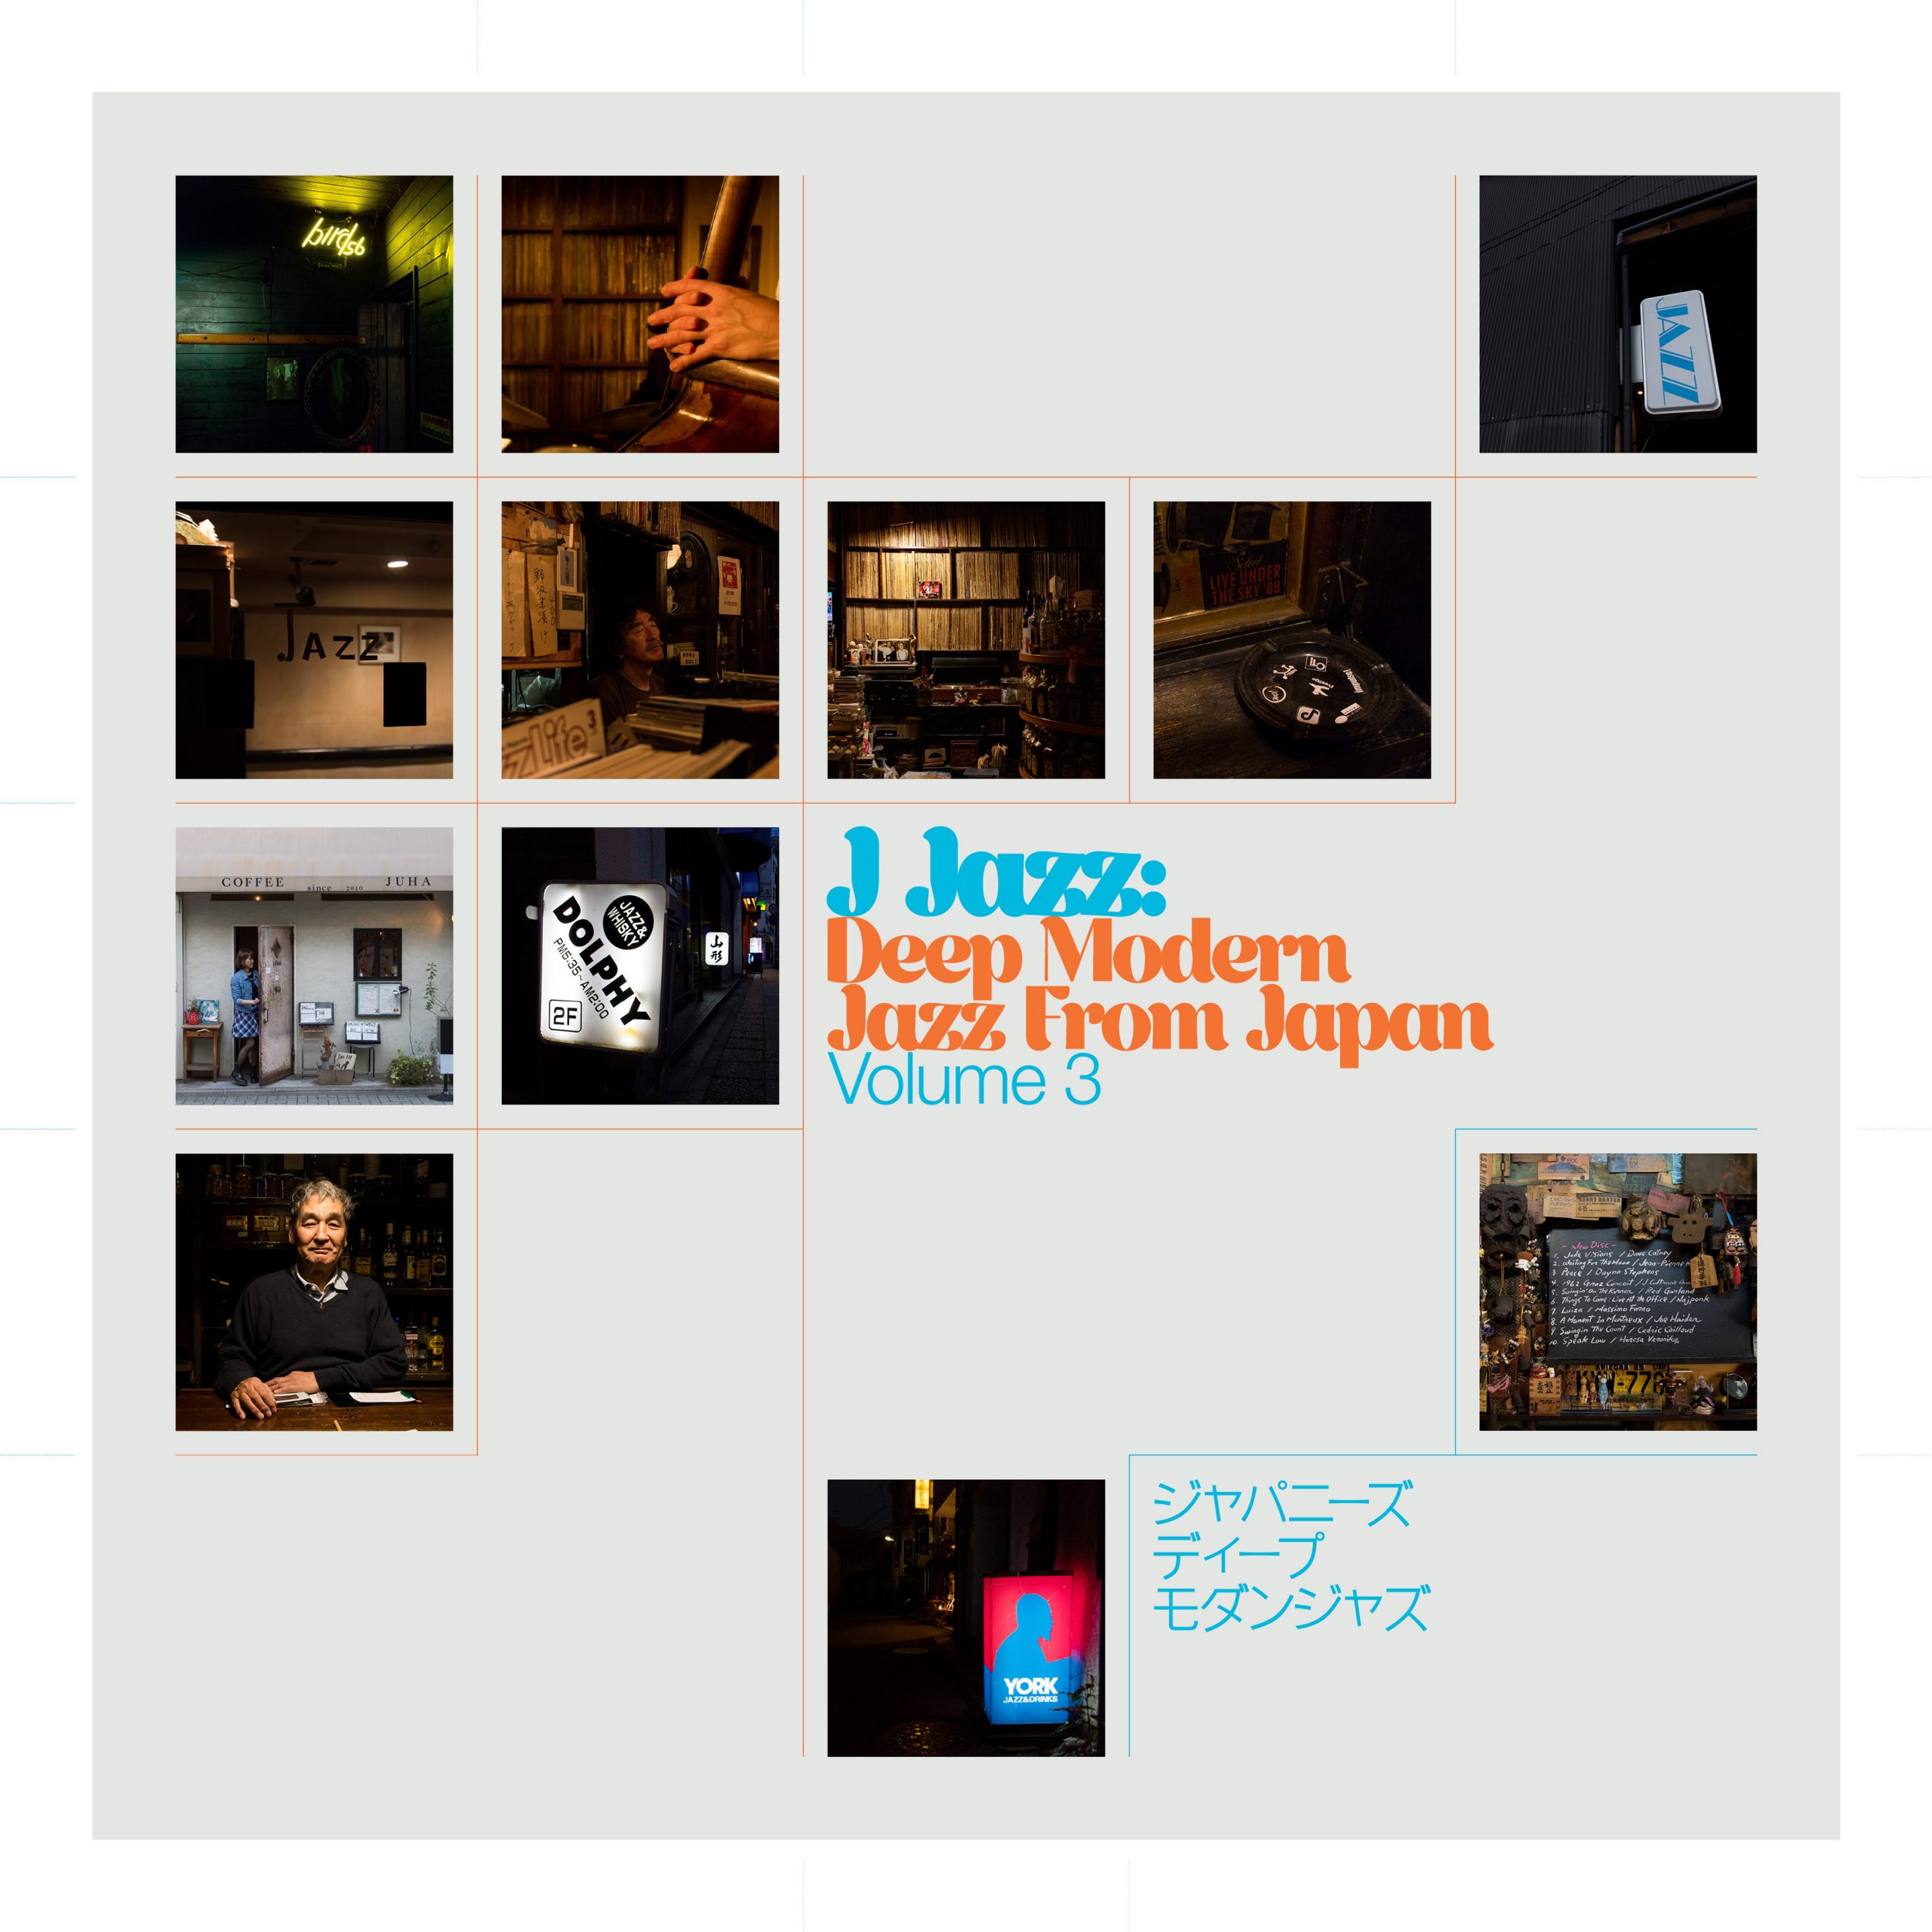 J Jazz Vol. 4: Deep Modern Jazz from Japan - Nippon Columbia 1968